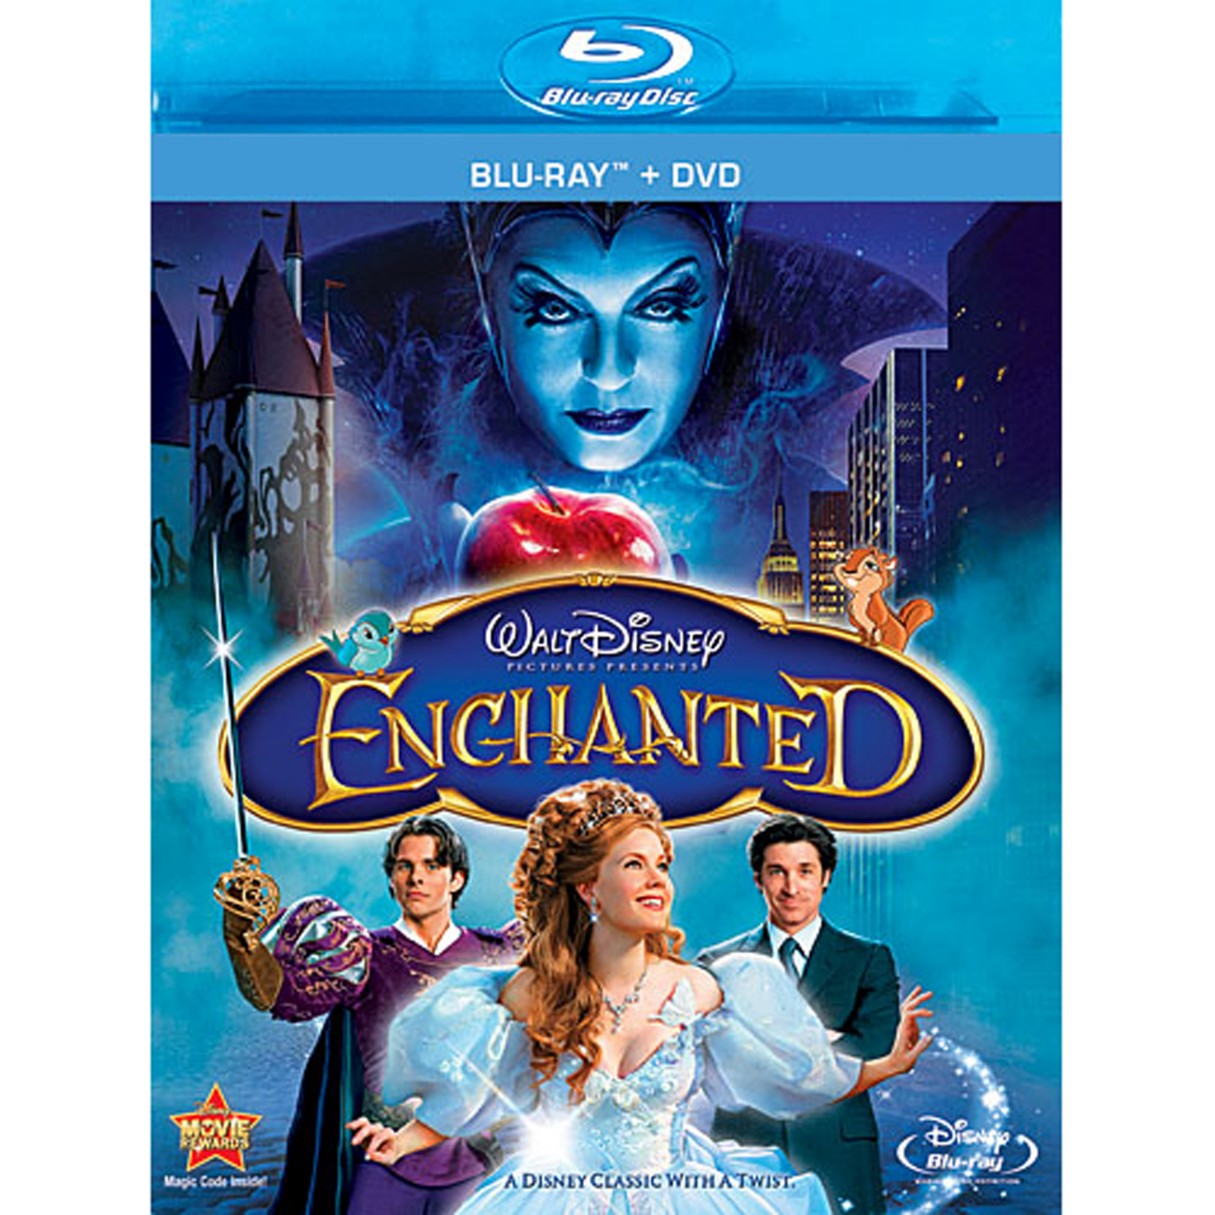 Enchanted – Blu-ray + DVD Combo Pack